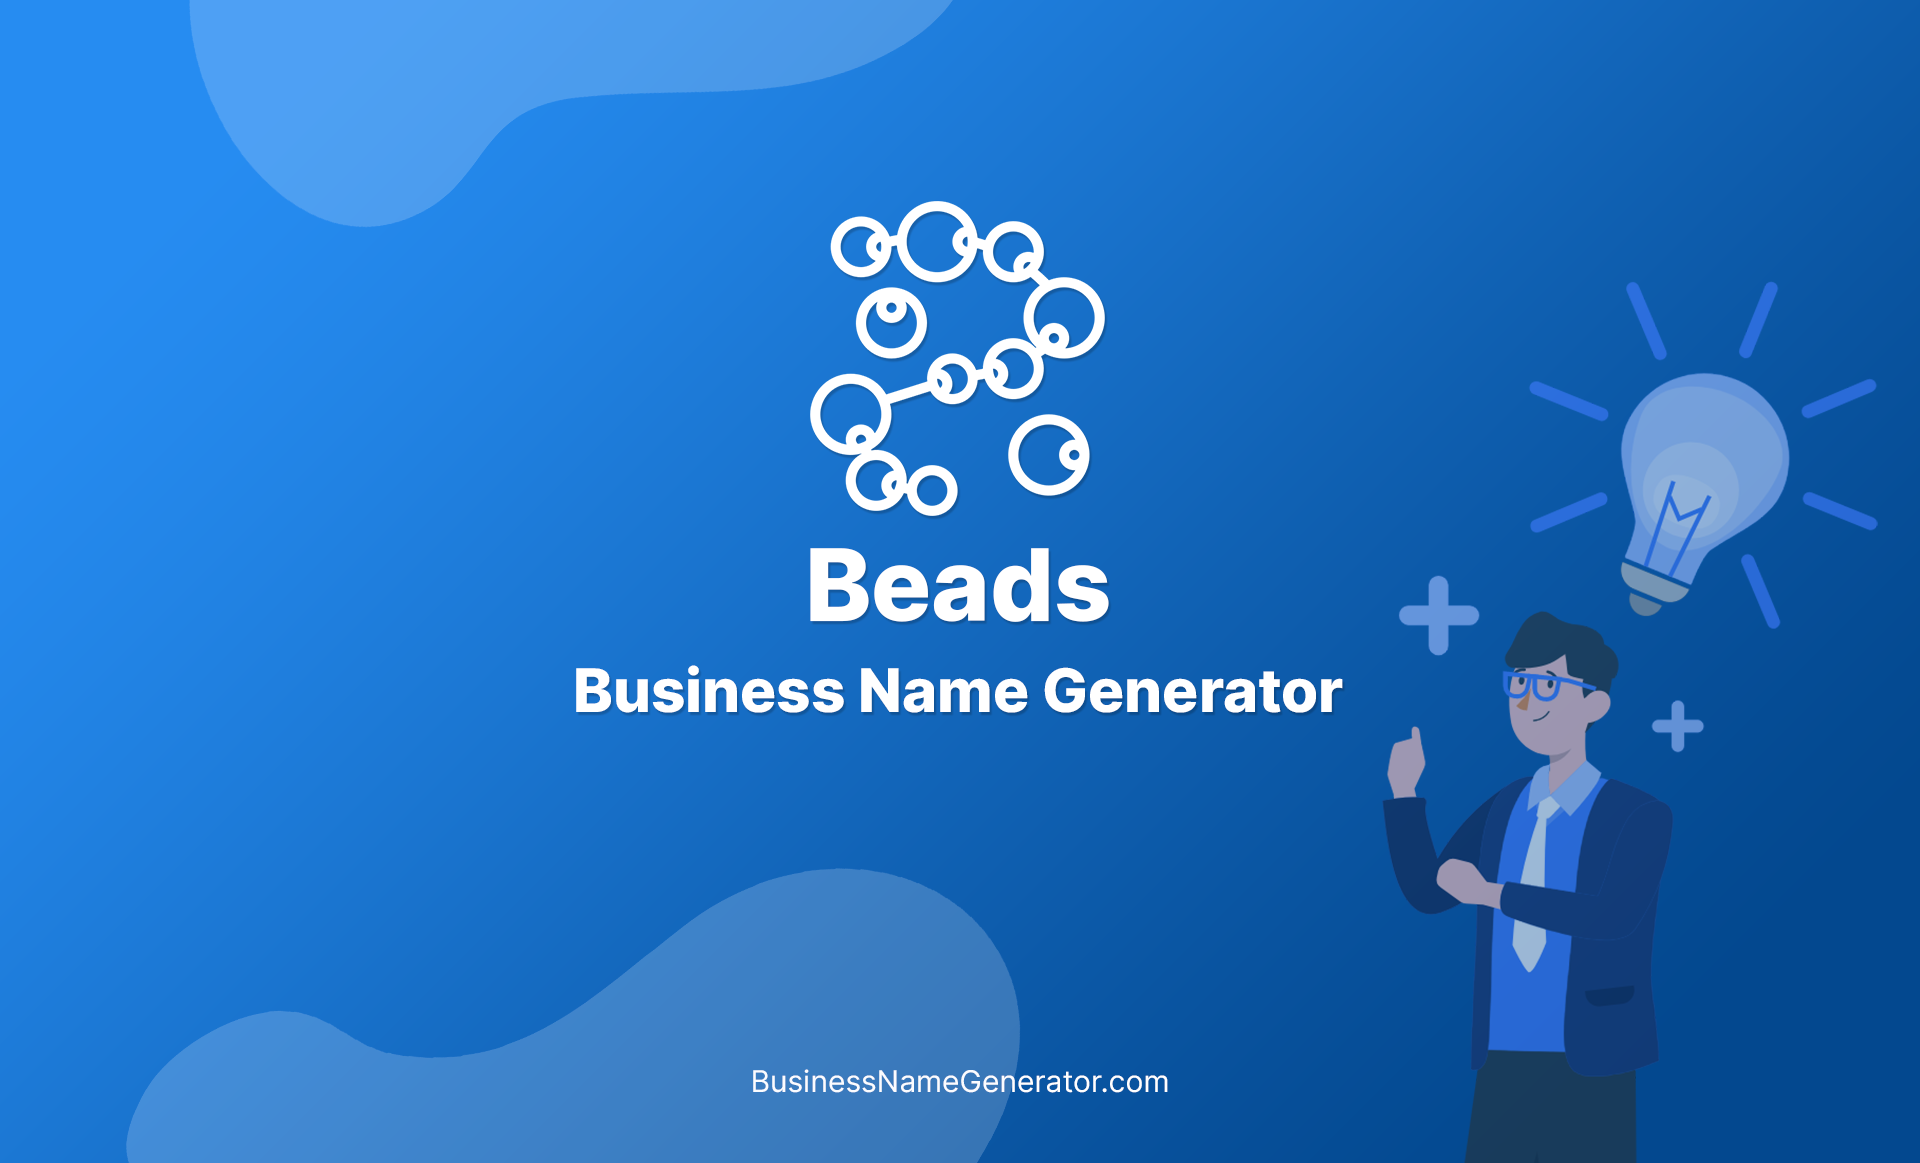 Beads Business Name Generator